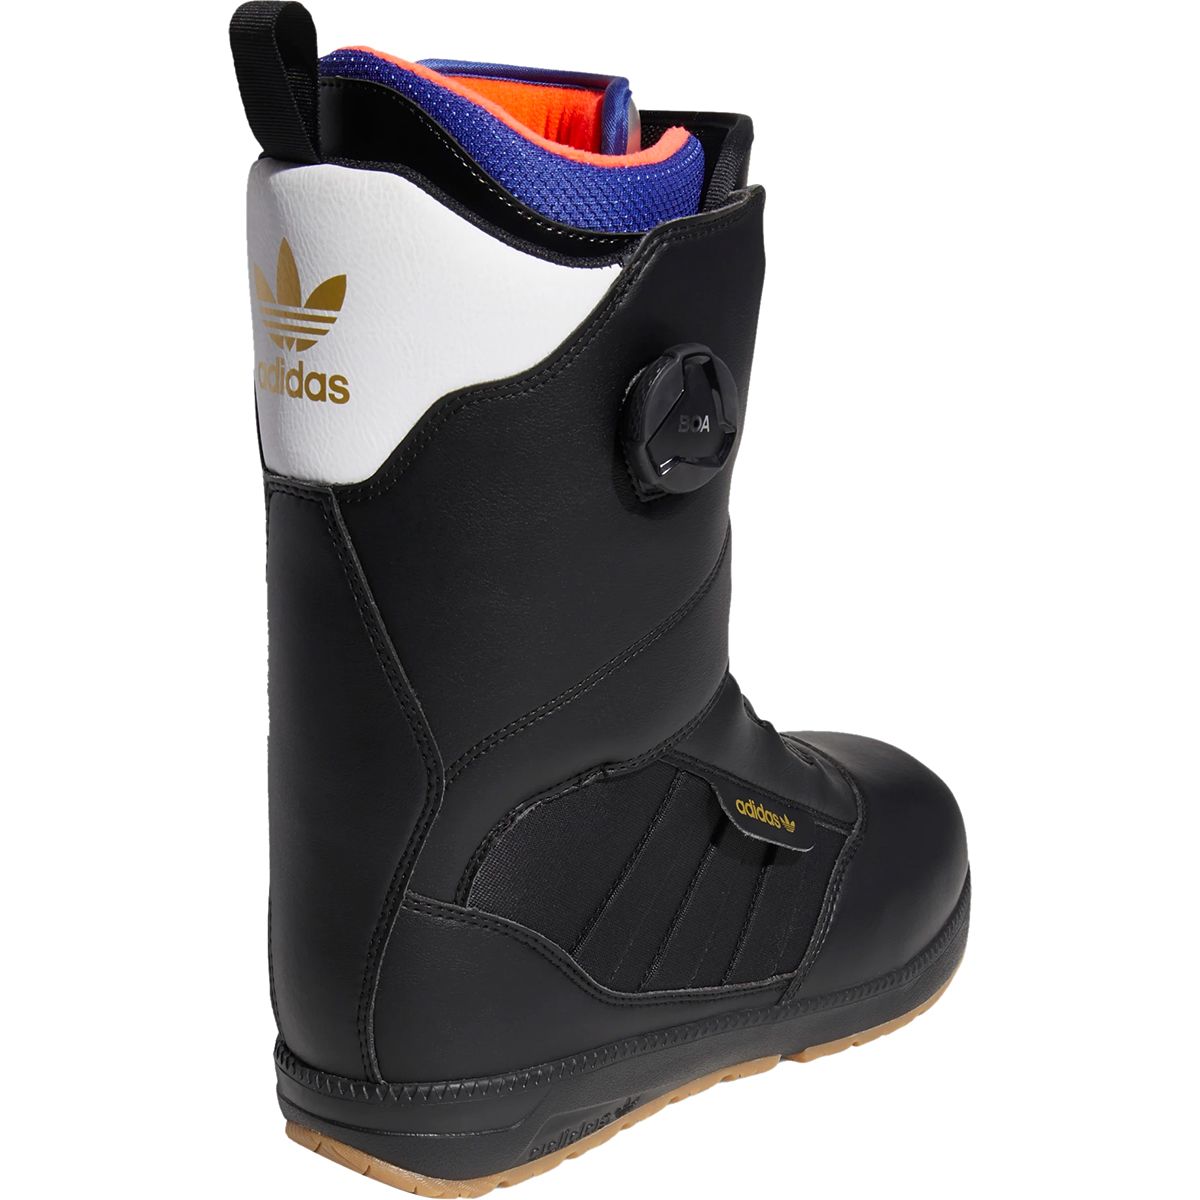 Adidas Response 3MC ADV Snowboard Boot 